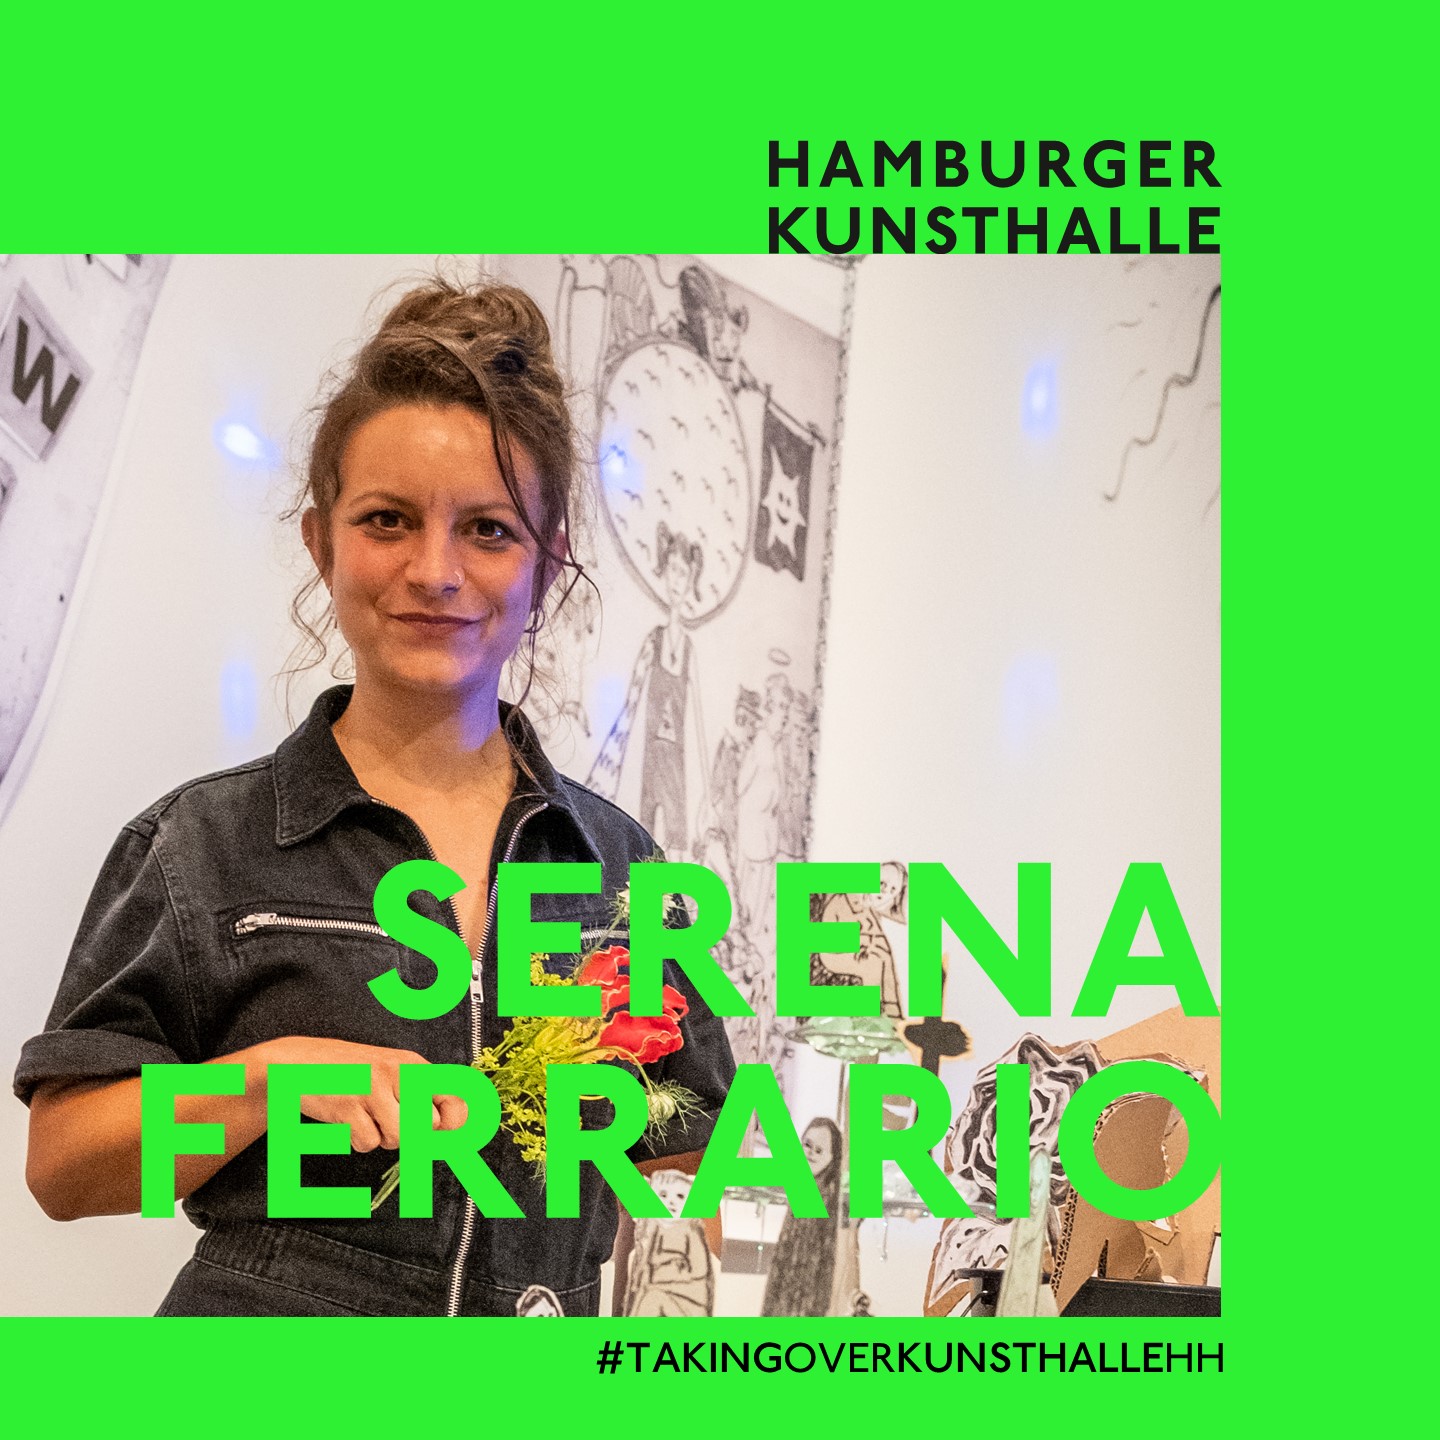 Serena Ferrario in ihrer Installation "Where the Drawings Live", Hamburger Kunsthalle 2021, Foto: Jörg Carstensen